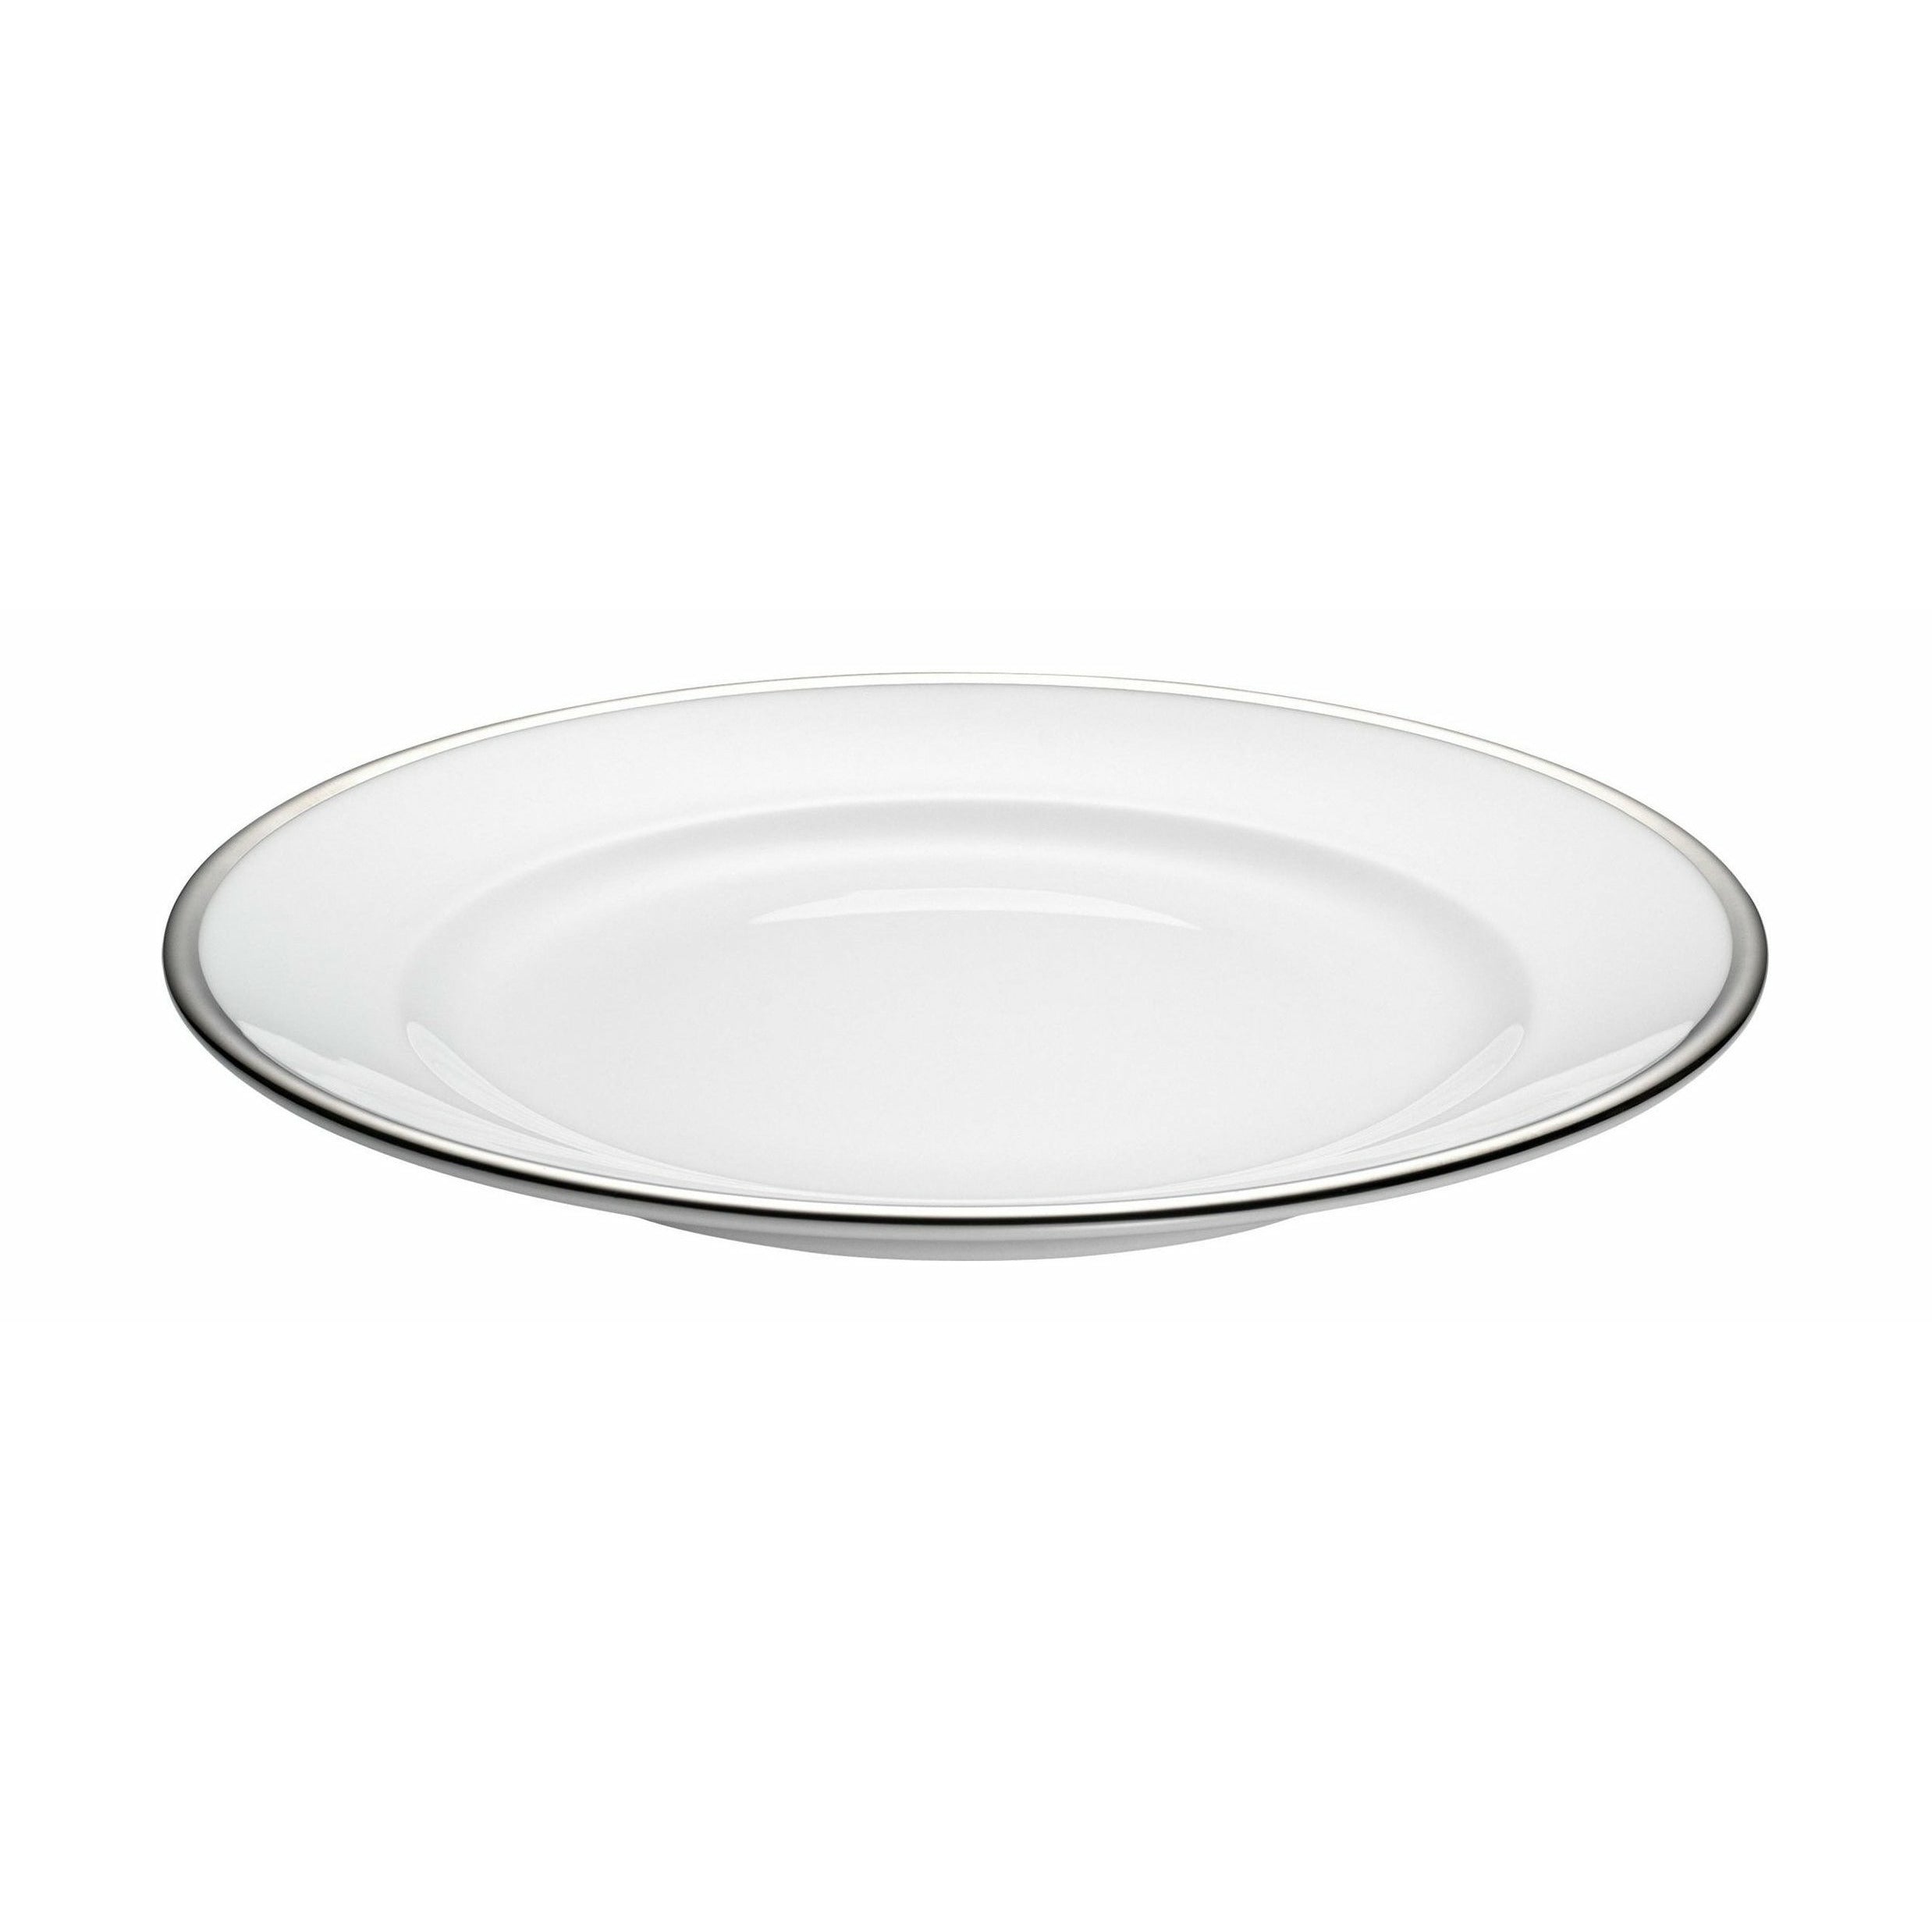 Pillivuyt Bistro Plate Ø 21 cm, vit/silver